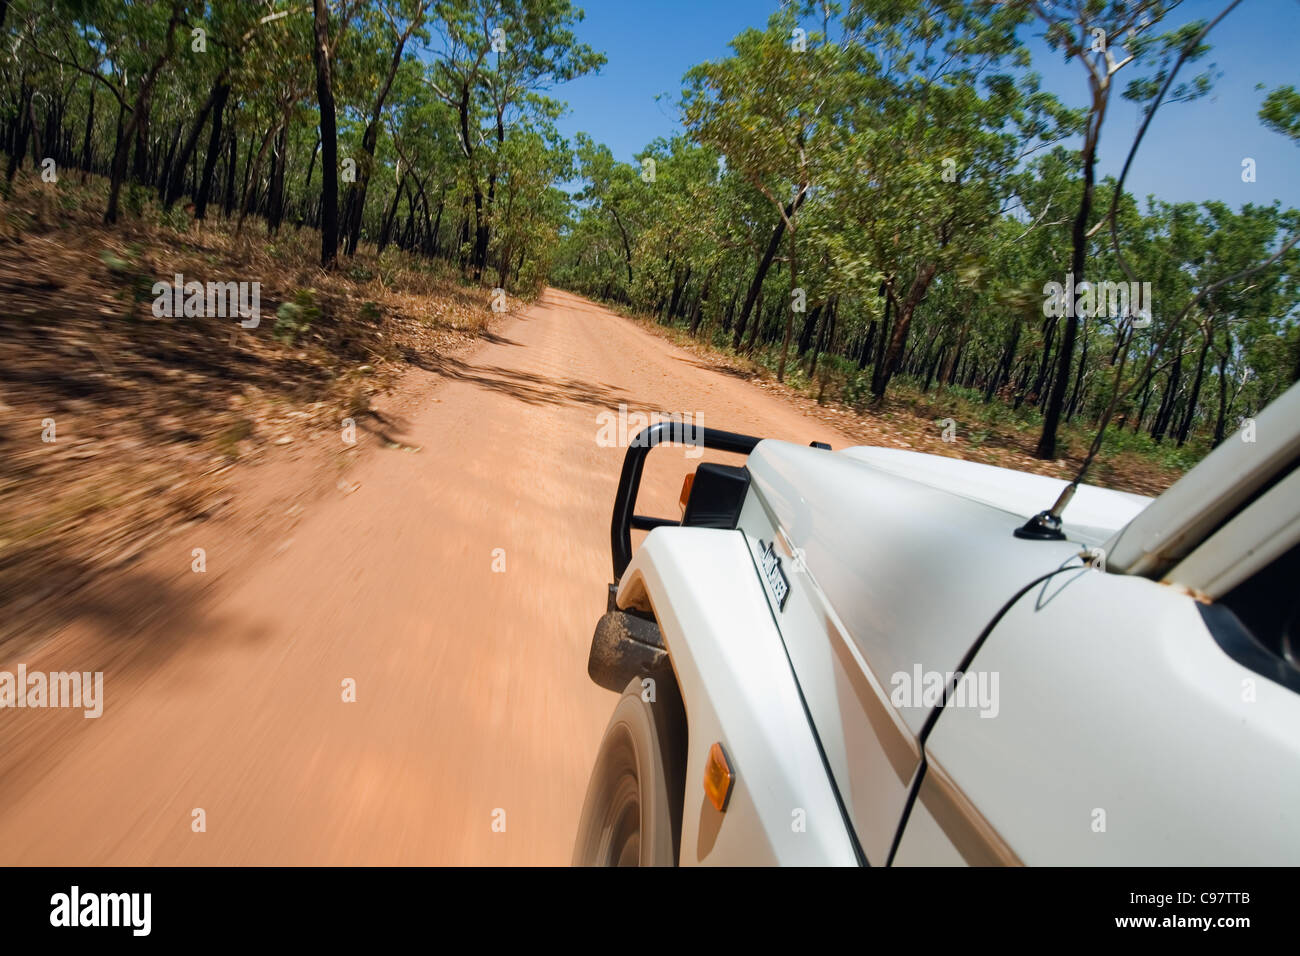 Four wheel driving through savanna woodland in Kakadu National Park, Northern Territory, Australia Stock Photo